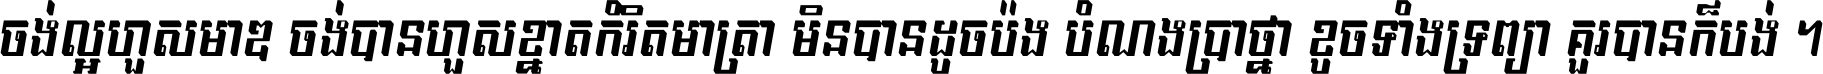 Kh Baphnom Keo Sarath Italic